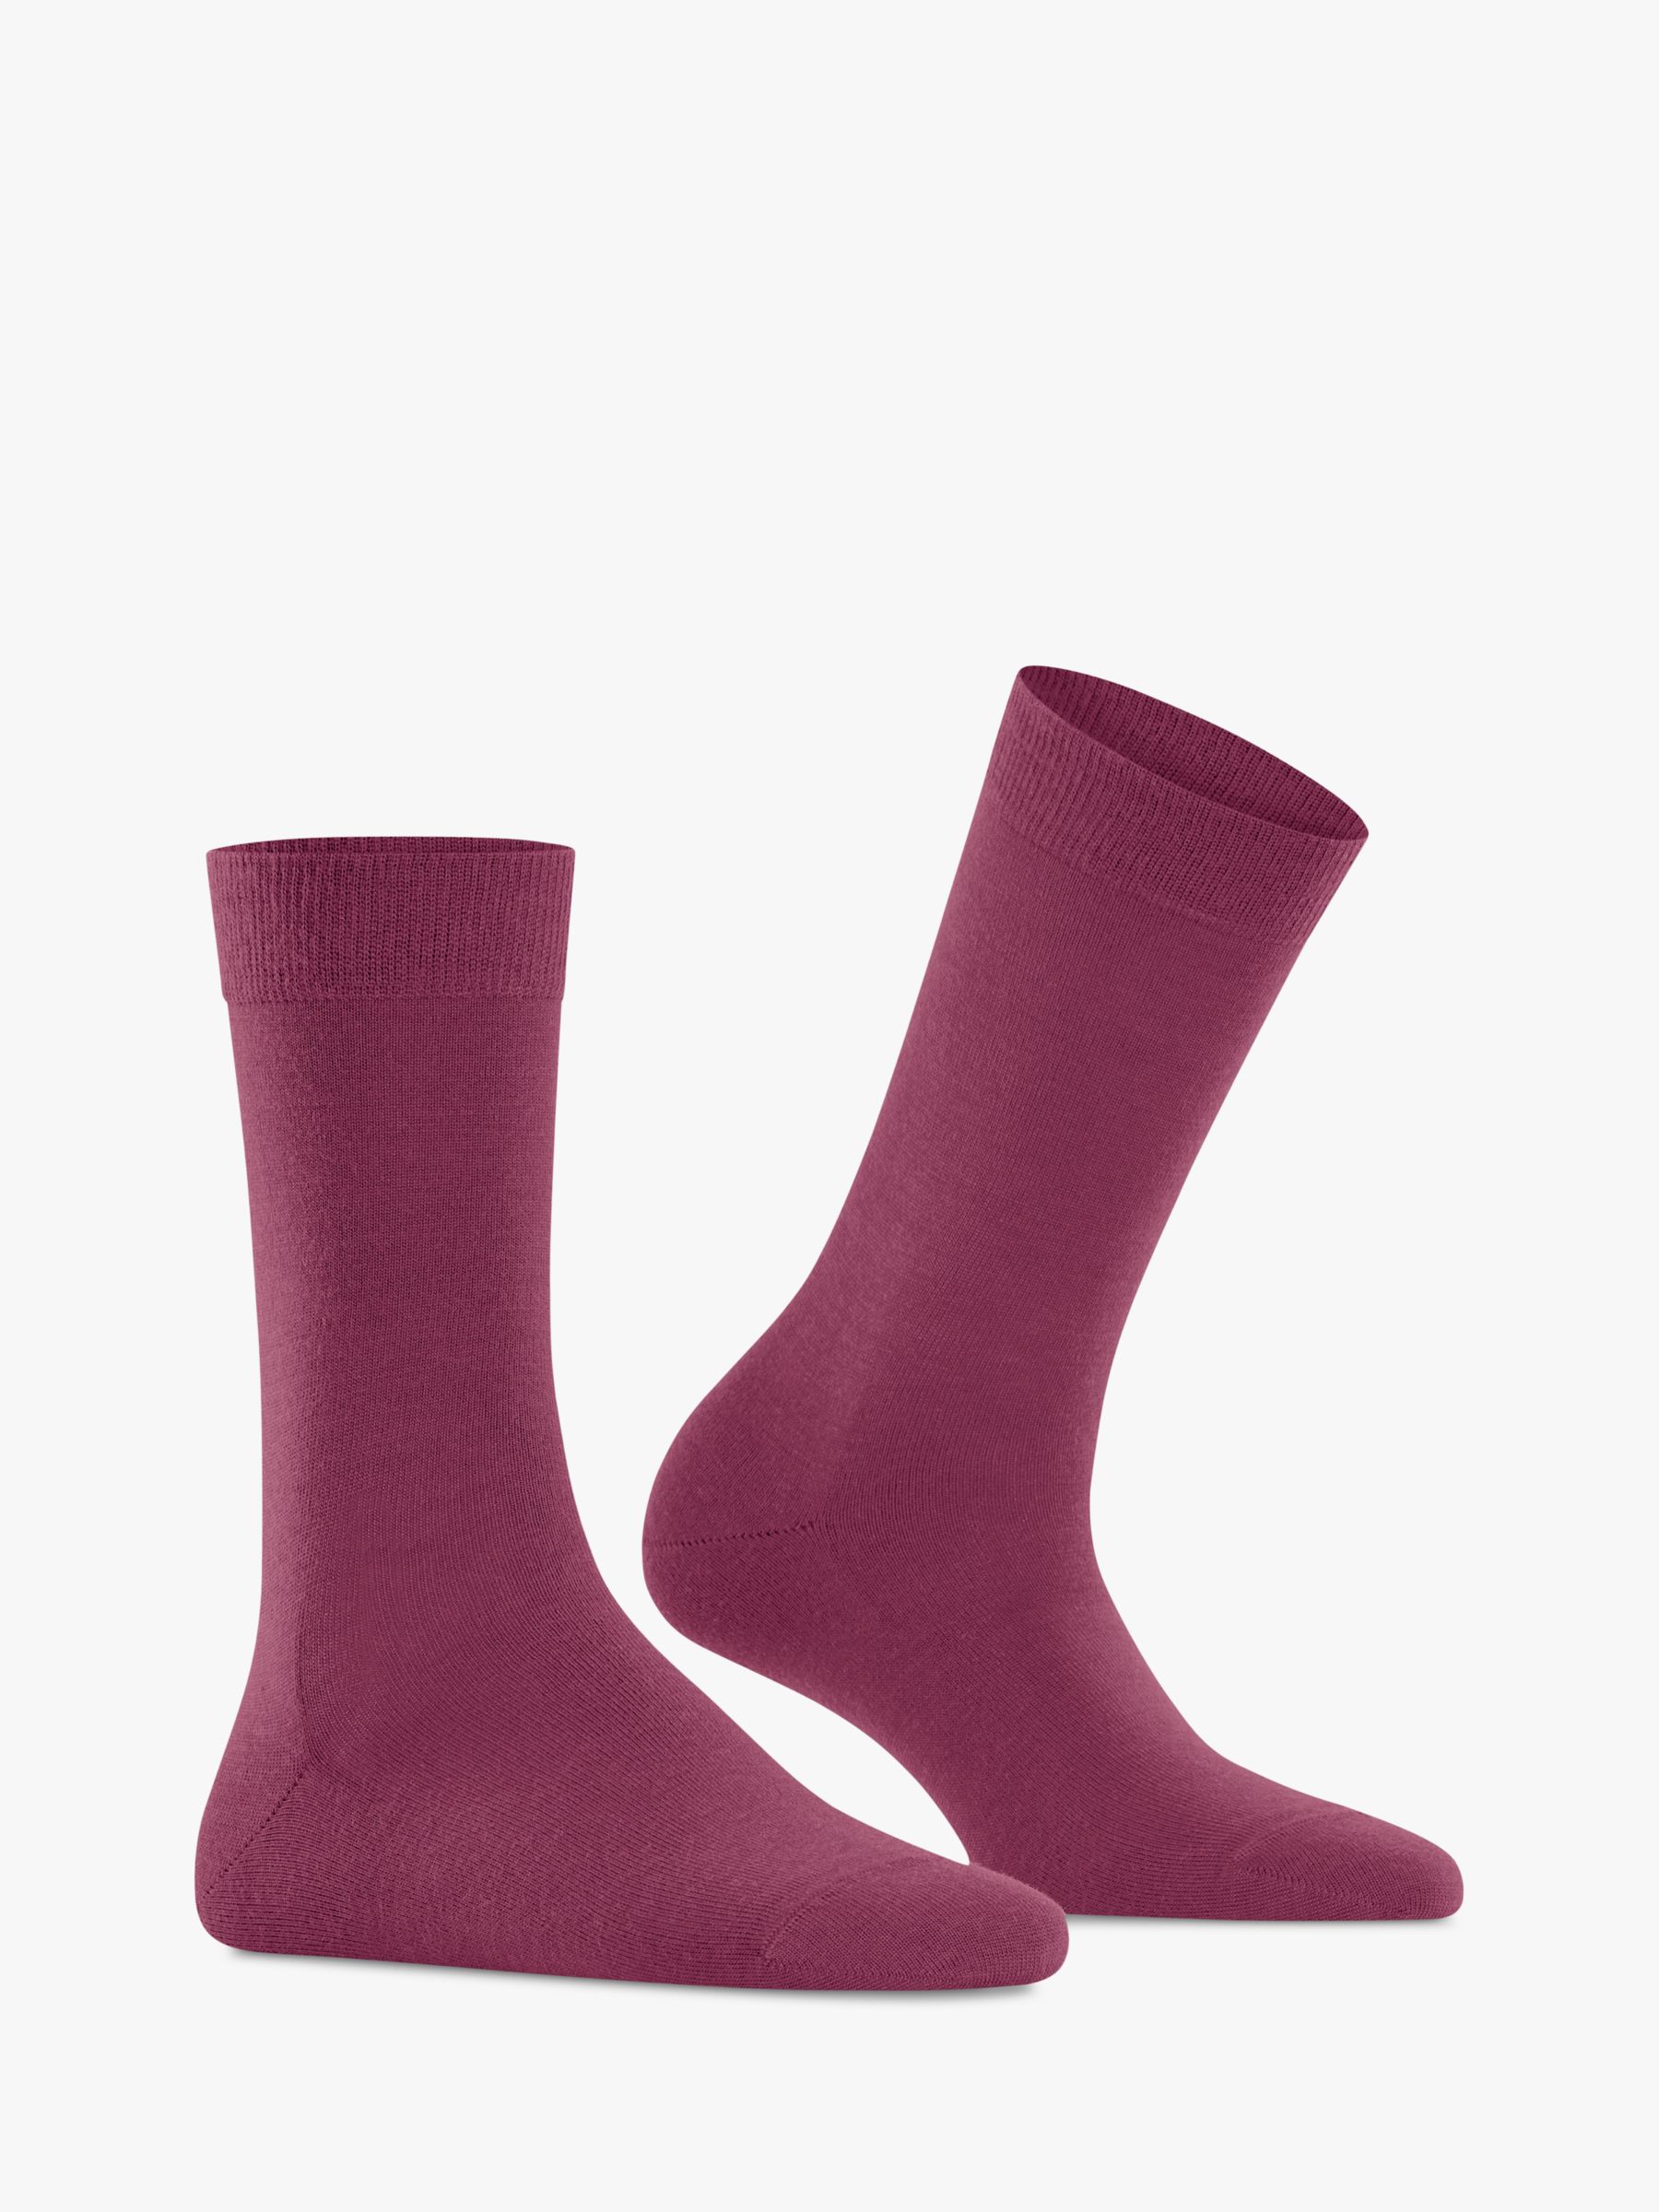 FALKE Soft Merino Wool Ankle Socks, 8236 Red Plum at John Lewis & Partners